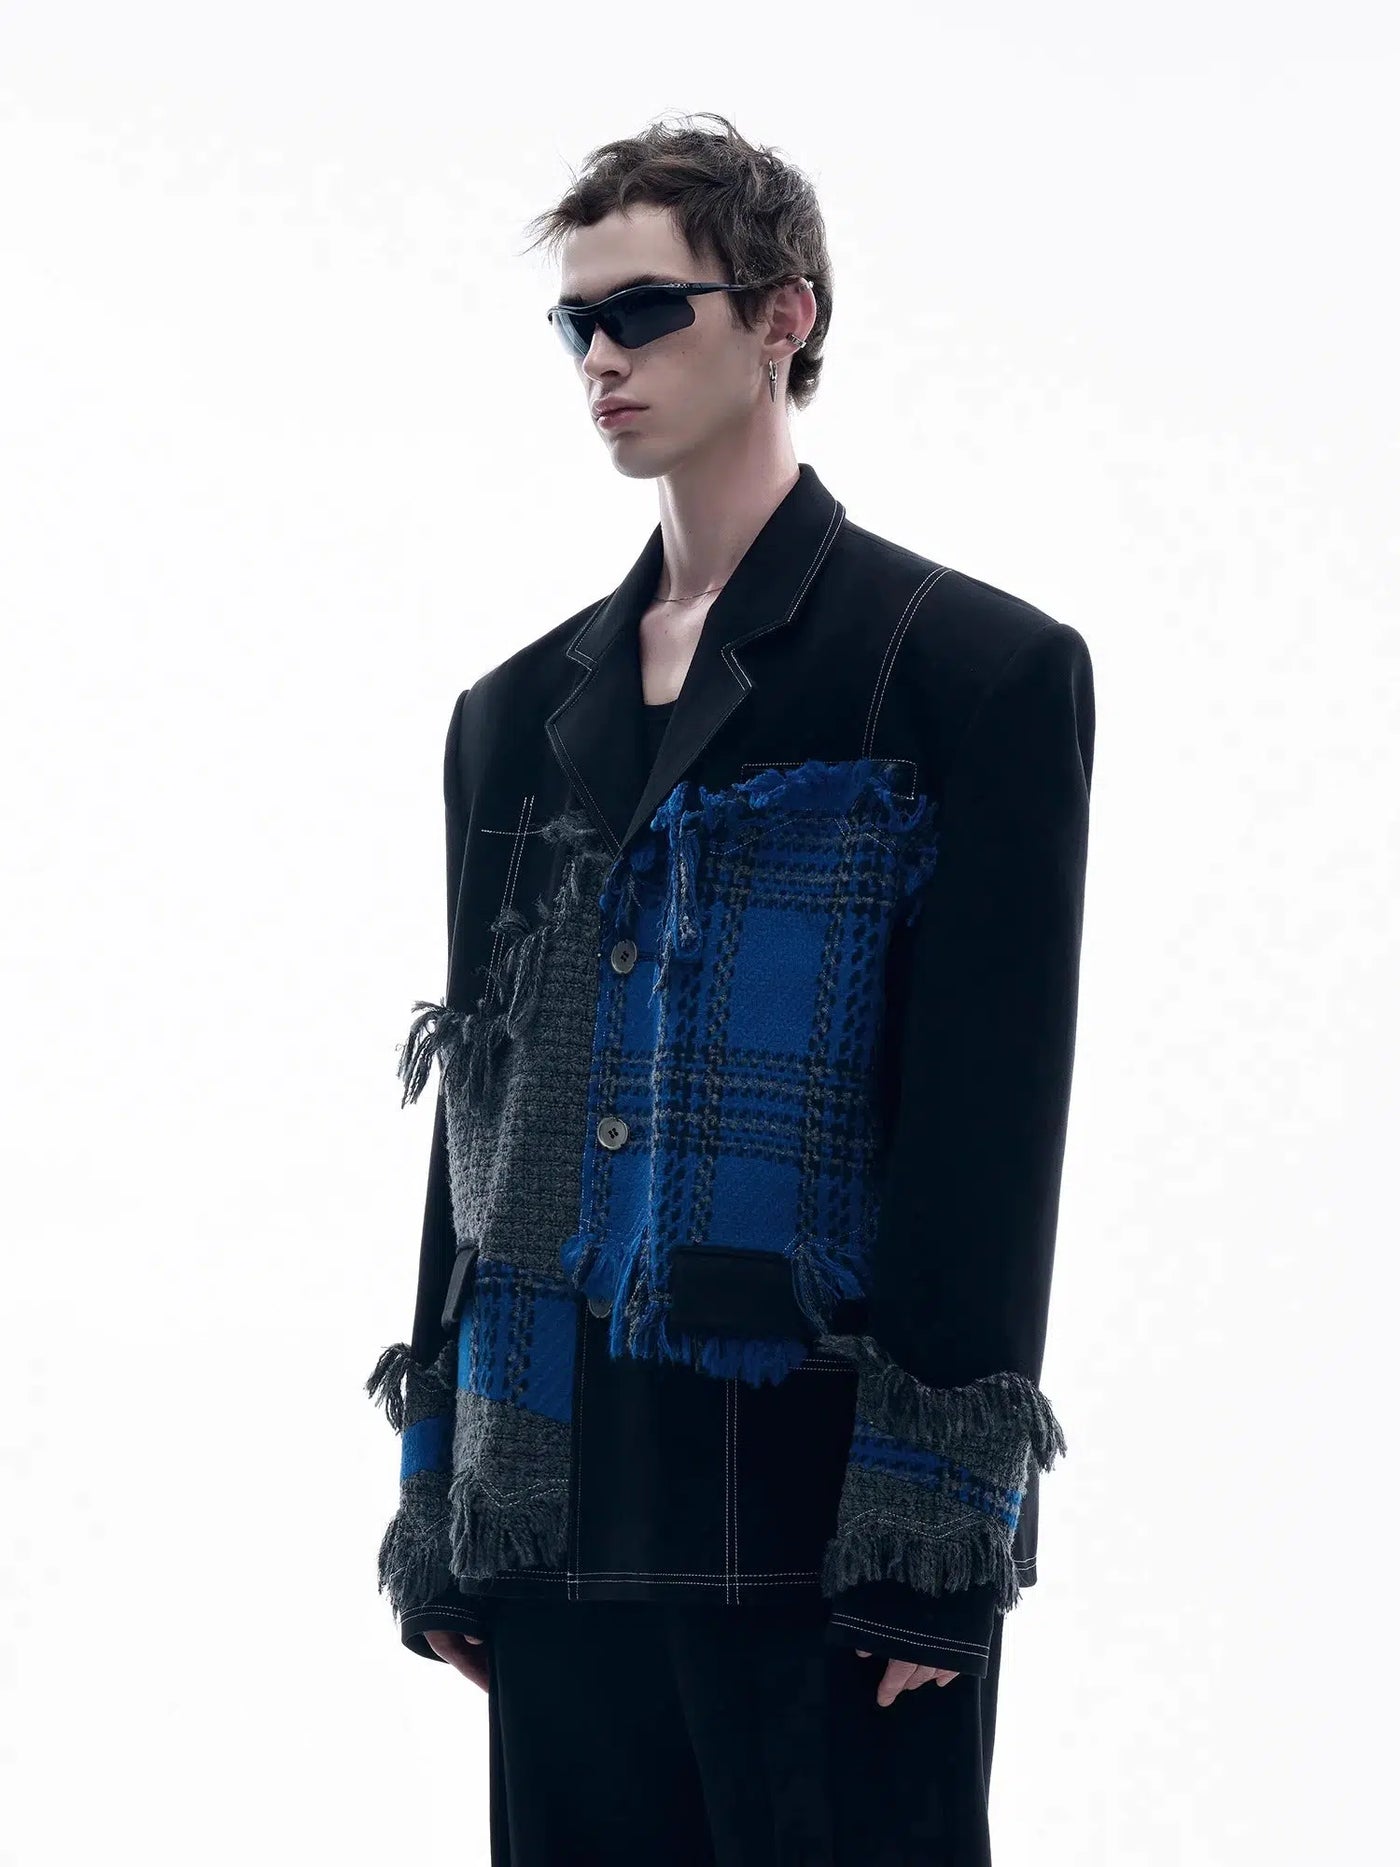 Distressed Knit Patterns Blazer Korean Street Fashion Blazer By TIWILLTANG Shop Online at OH Vault